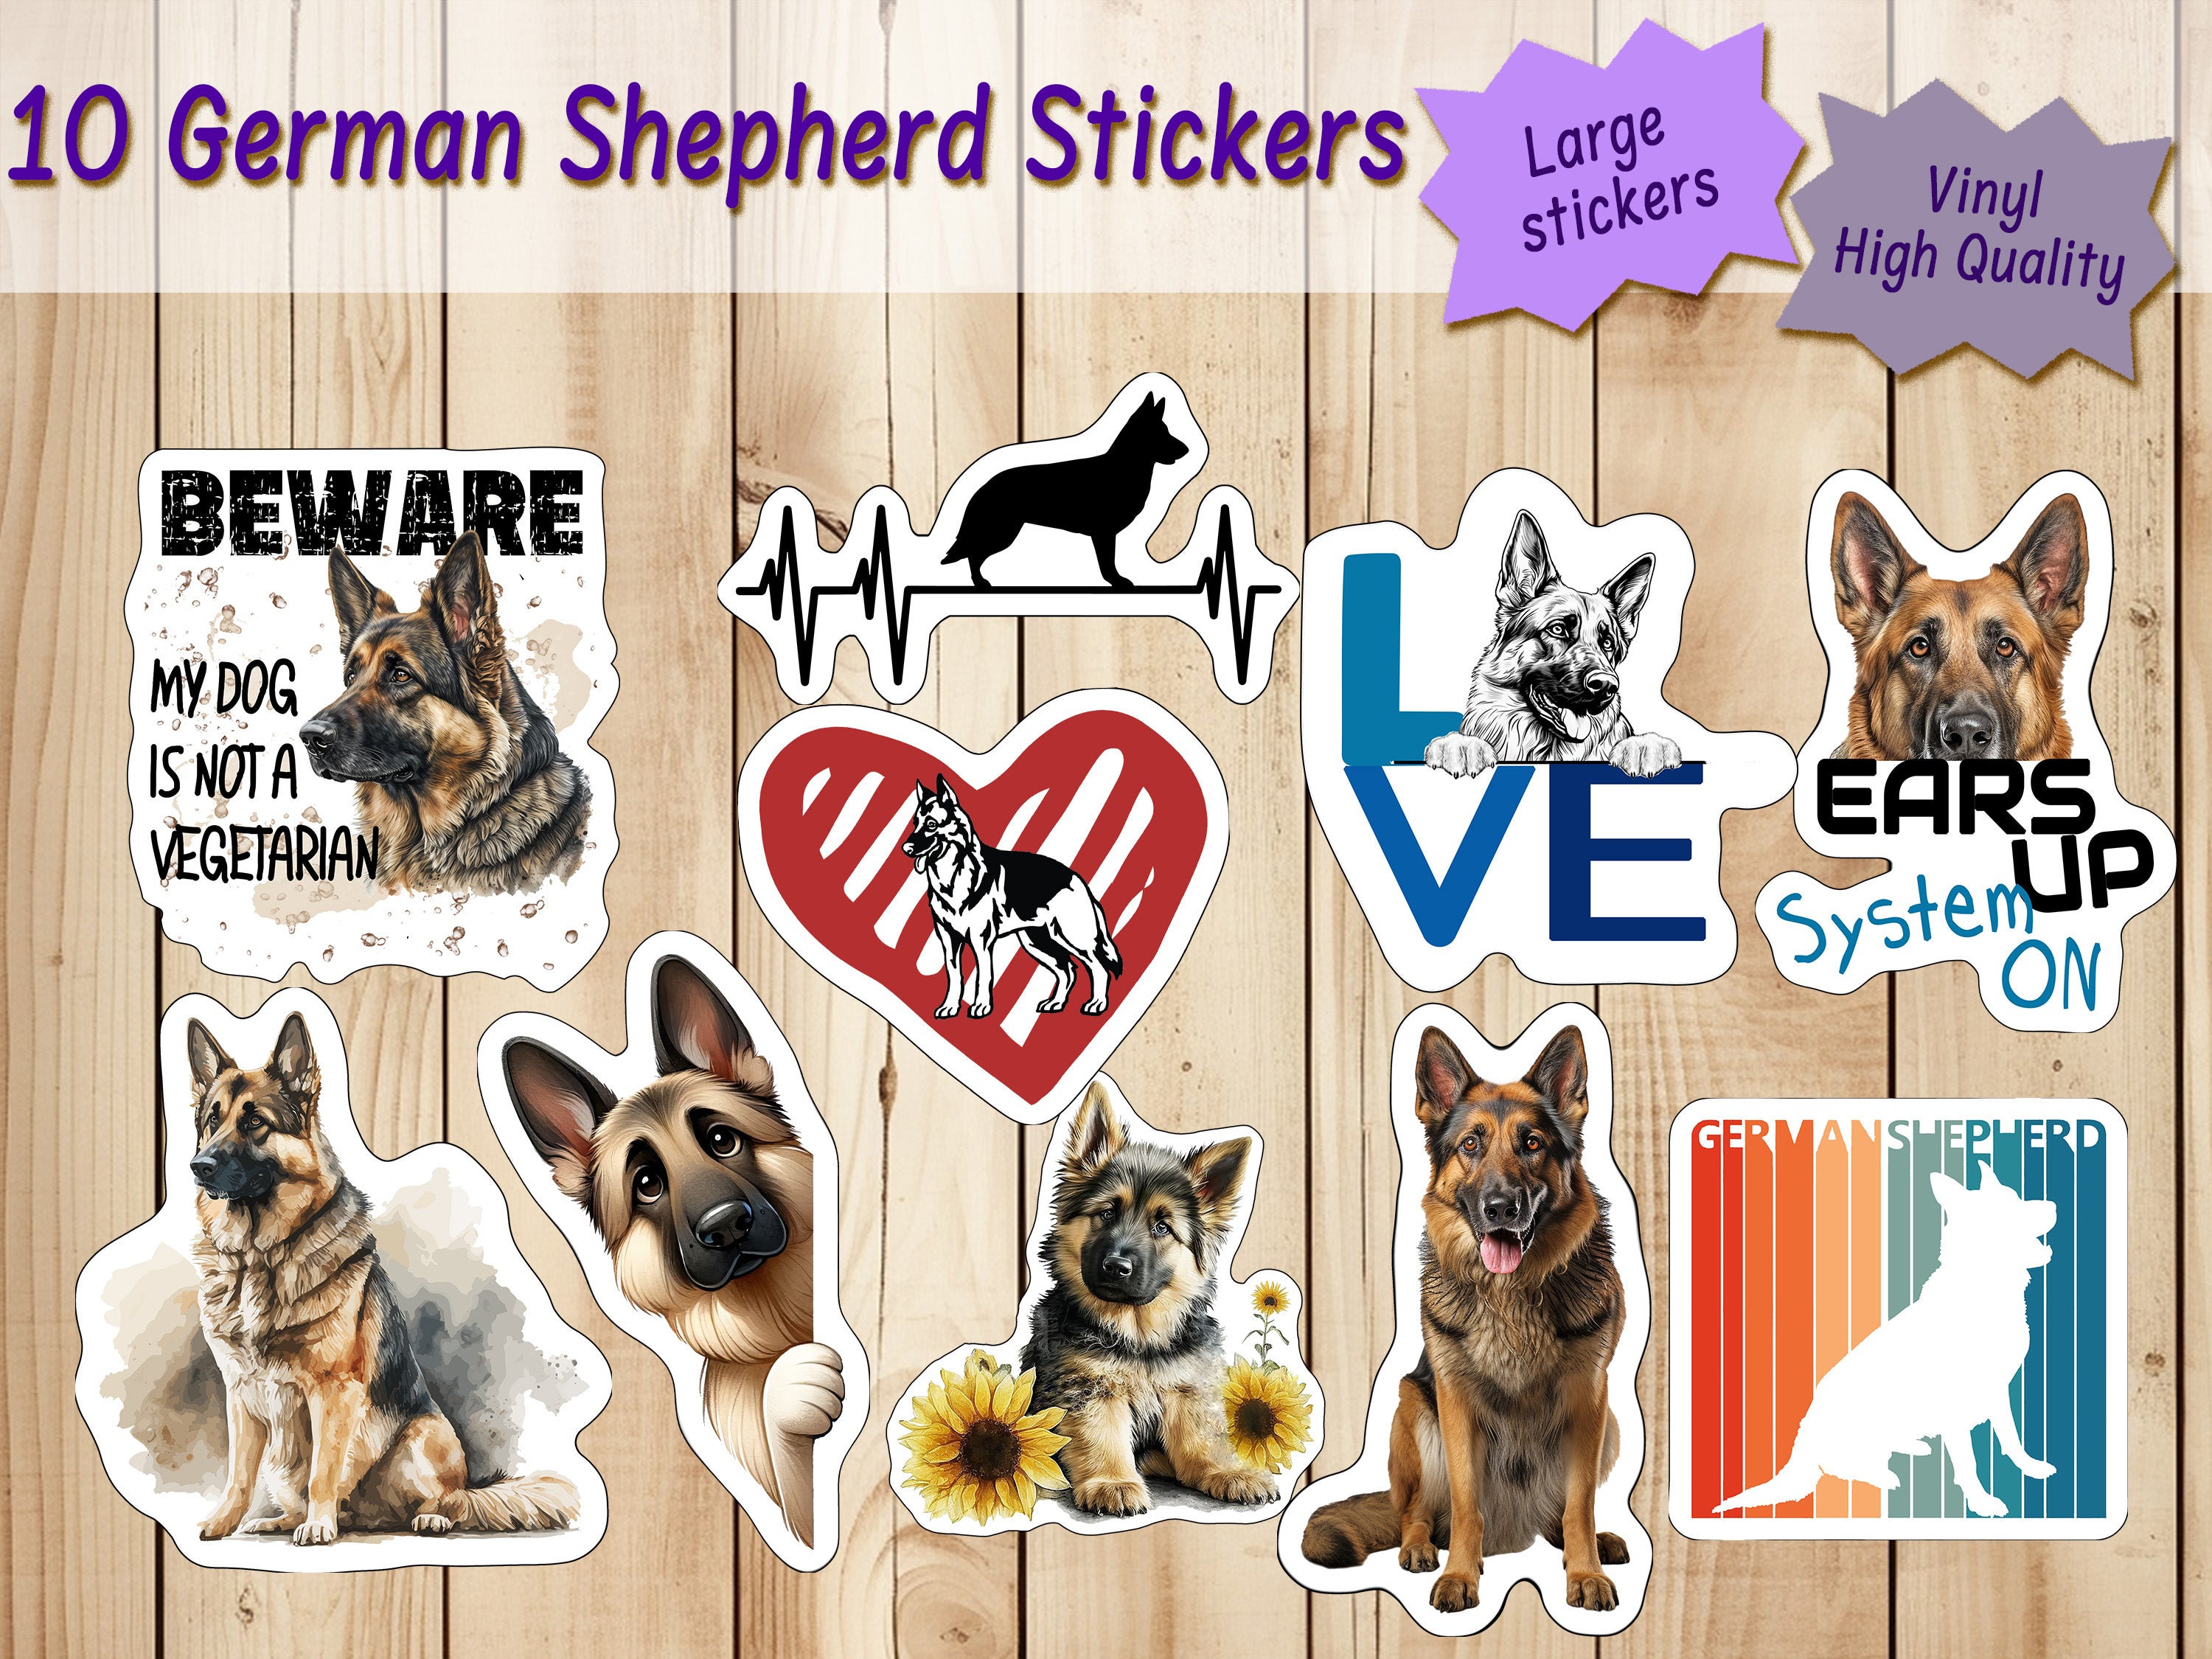 German Shepherd Stickers